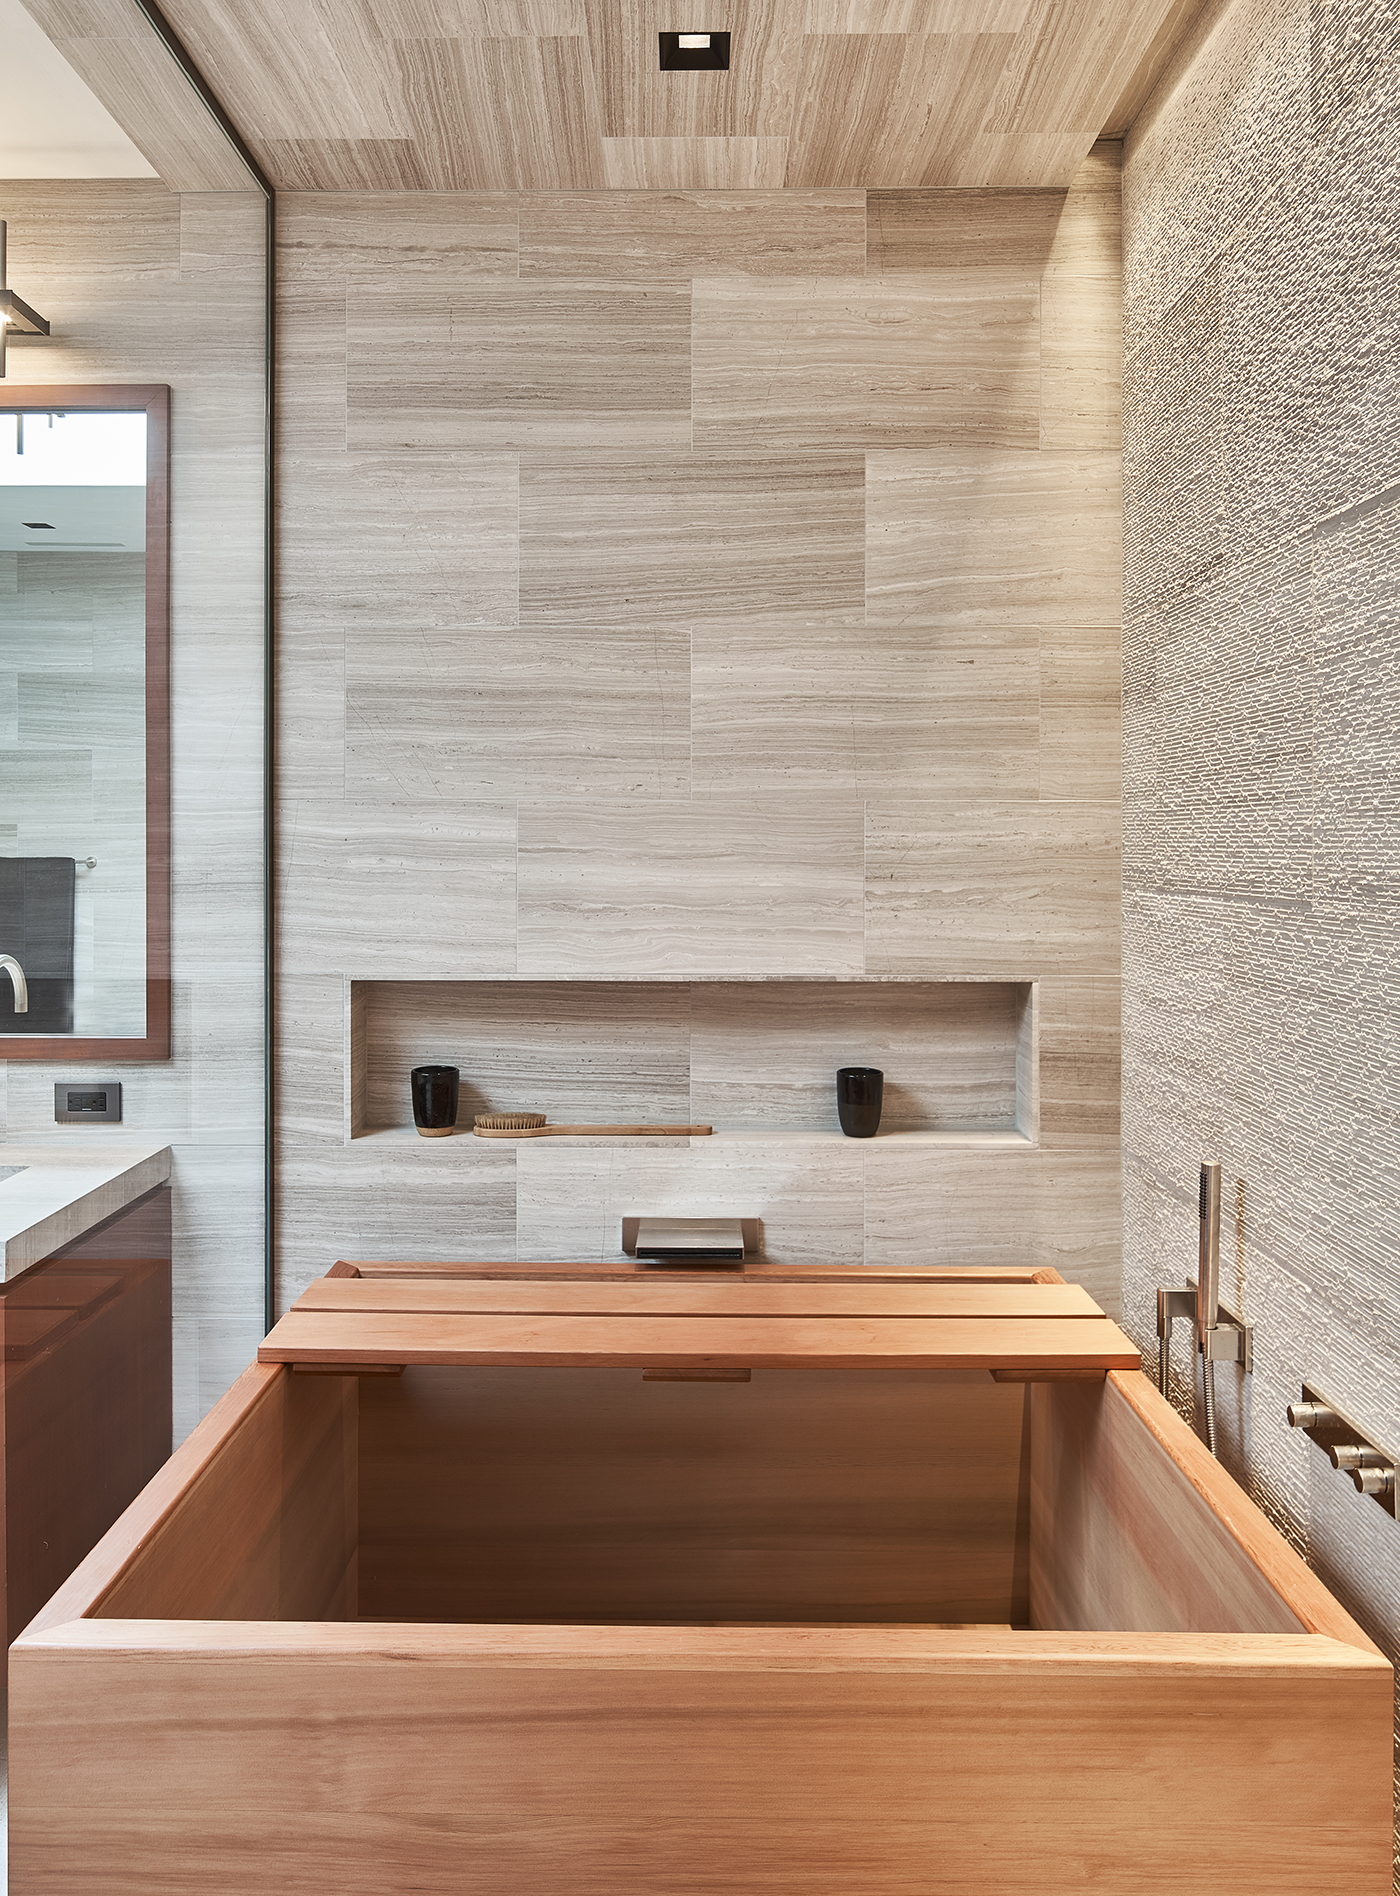 Modern design for a sauna room